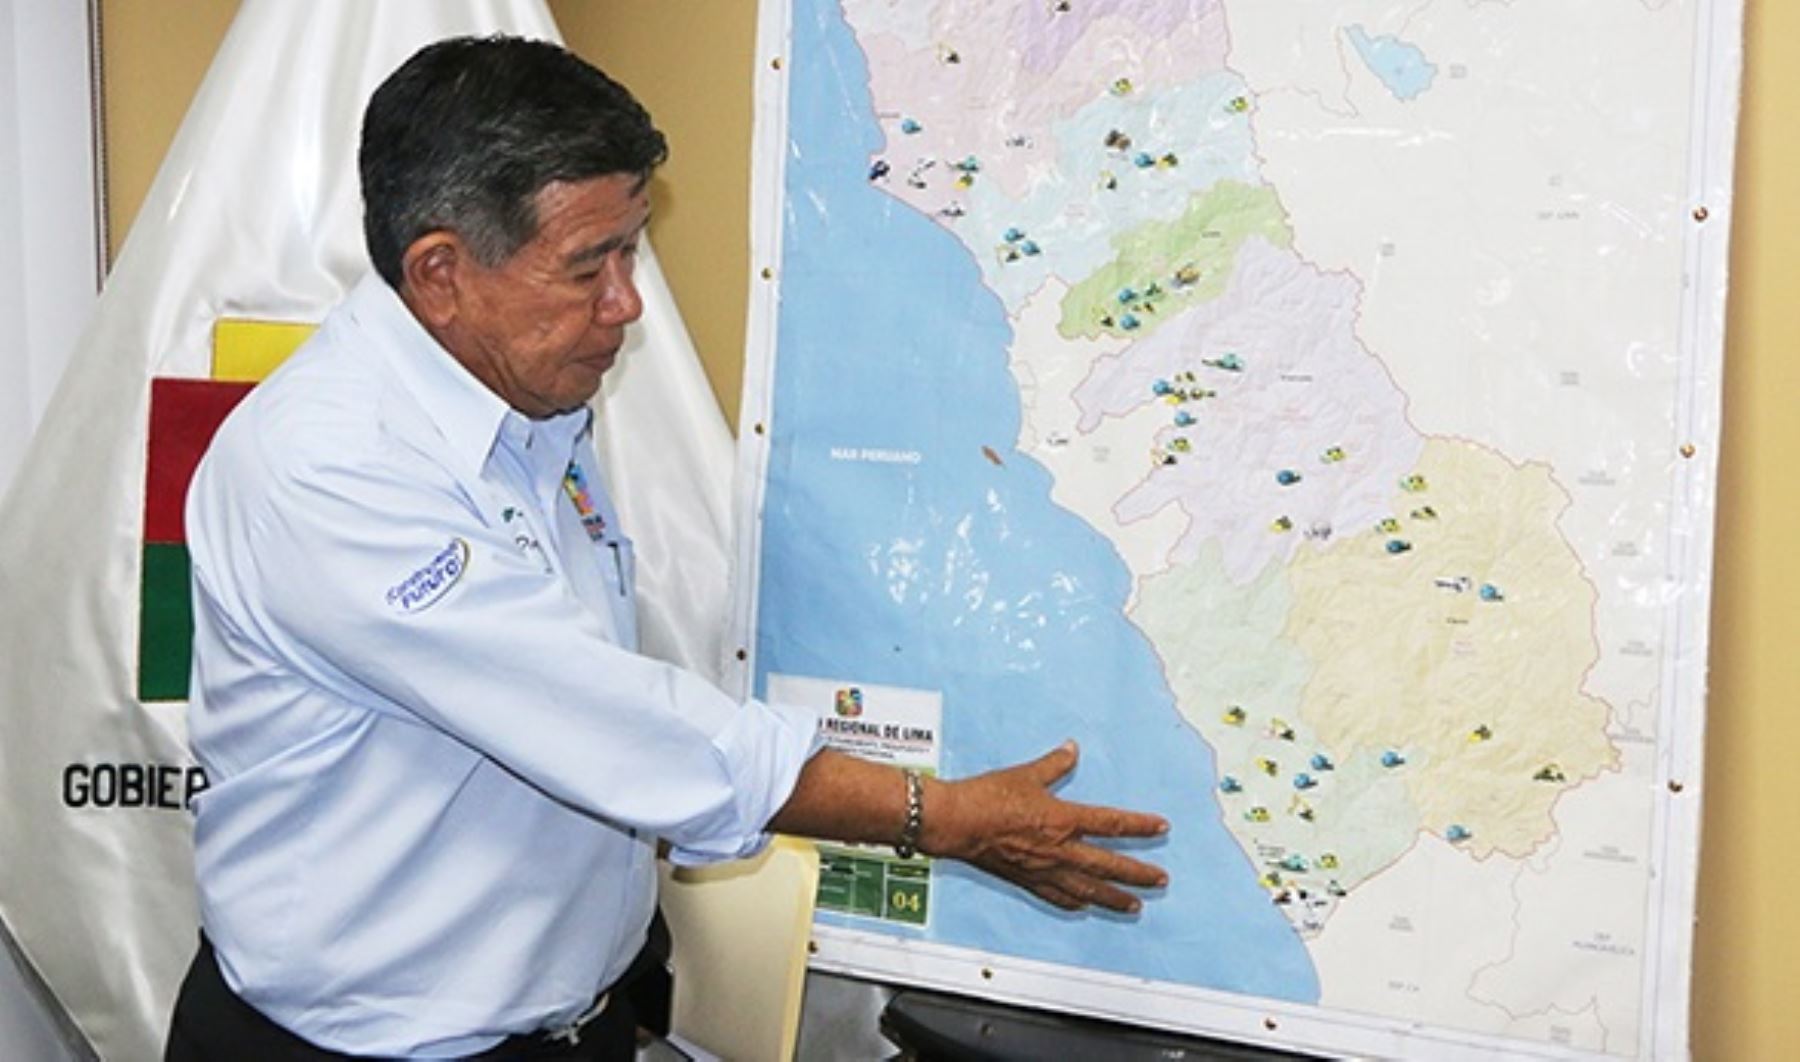 Gobernador regional de Lima Nelson Chui muestra zonas afectadas por huaicos, inundaciones ydeslizamientos donde opera maquinaria pesada.